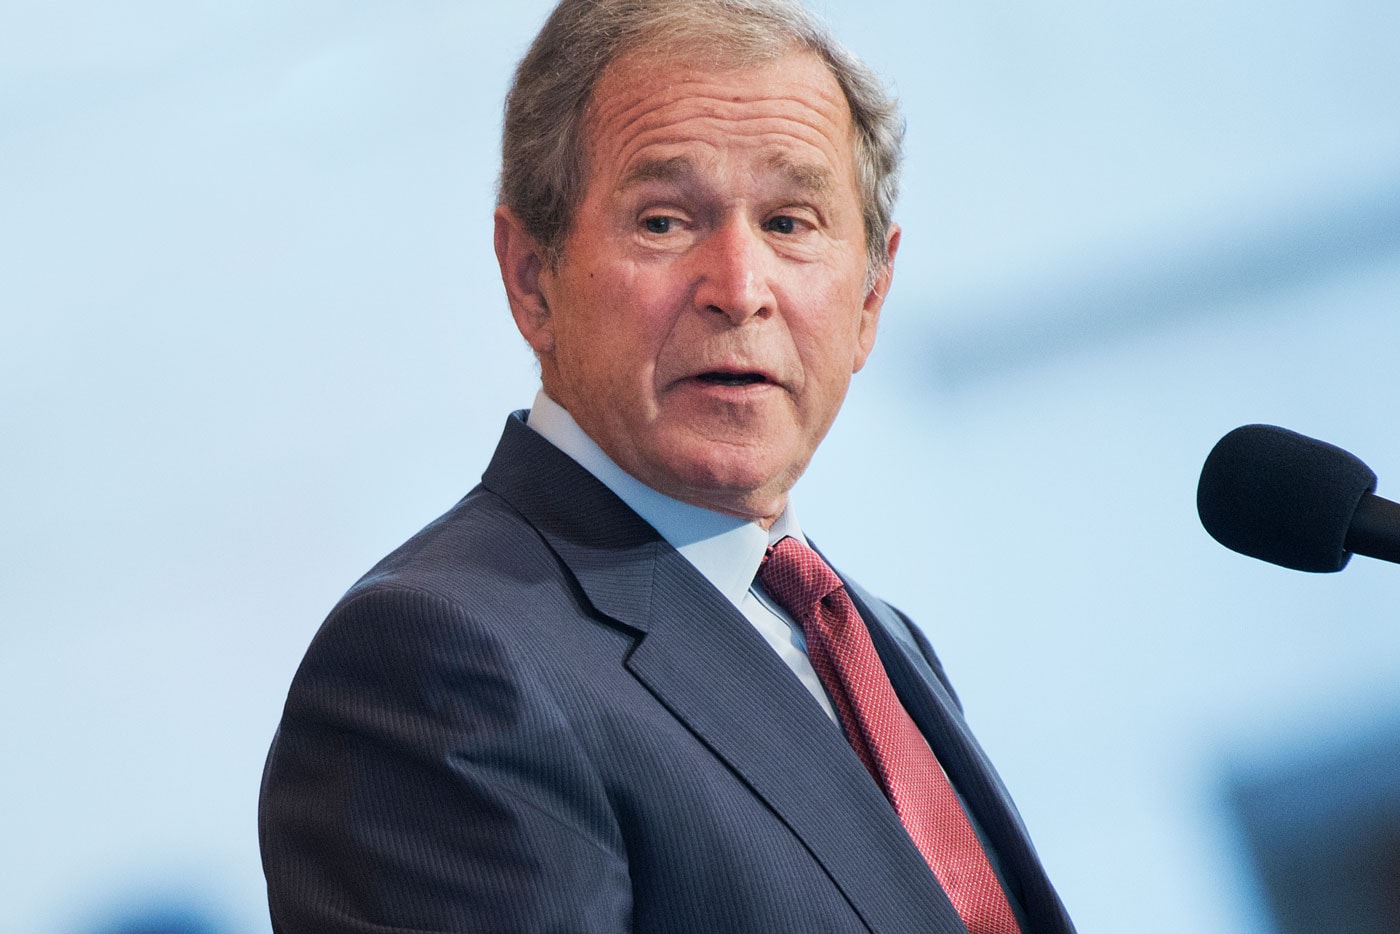 George W. Bush Reacts to Kanye West’s Presidential Bid